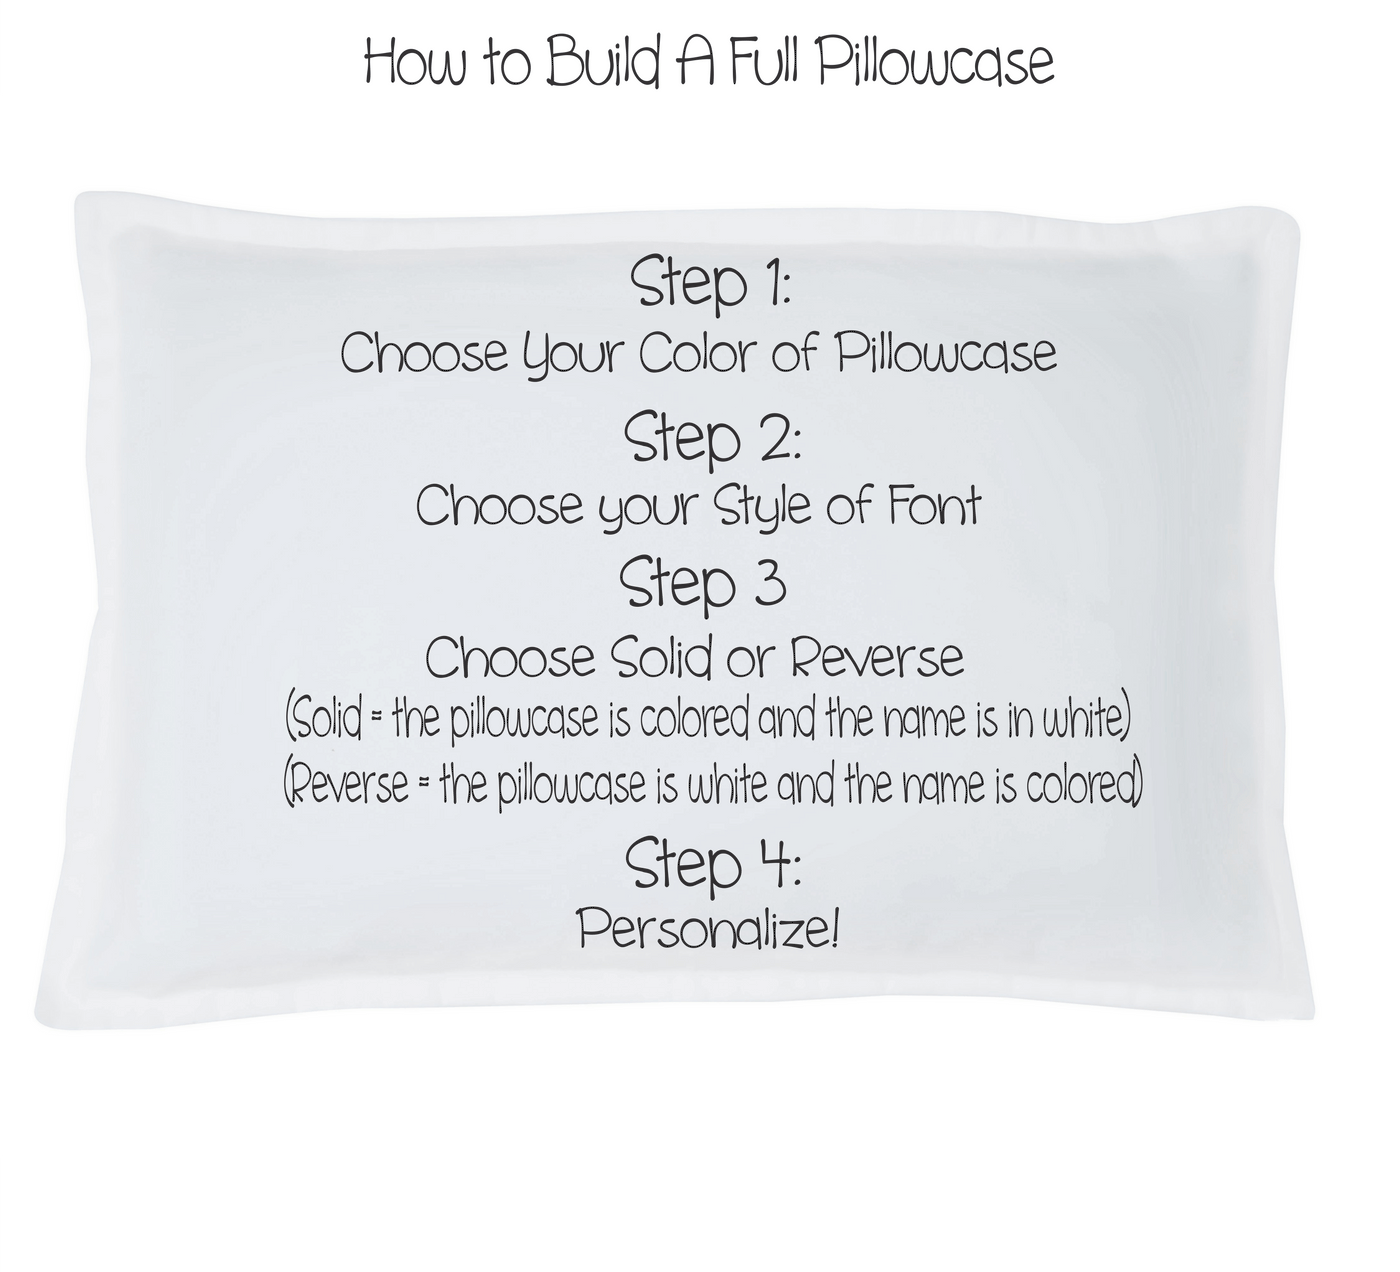 Build Your Own FULL Pillowcase